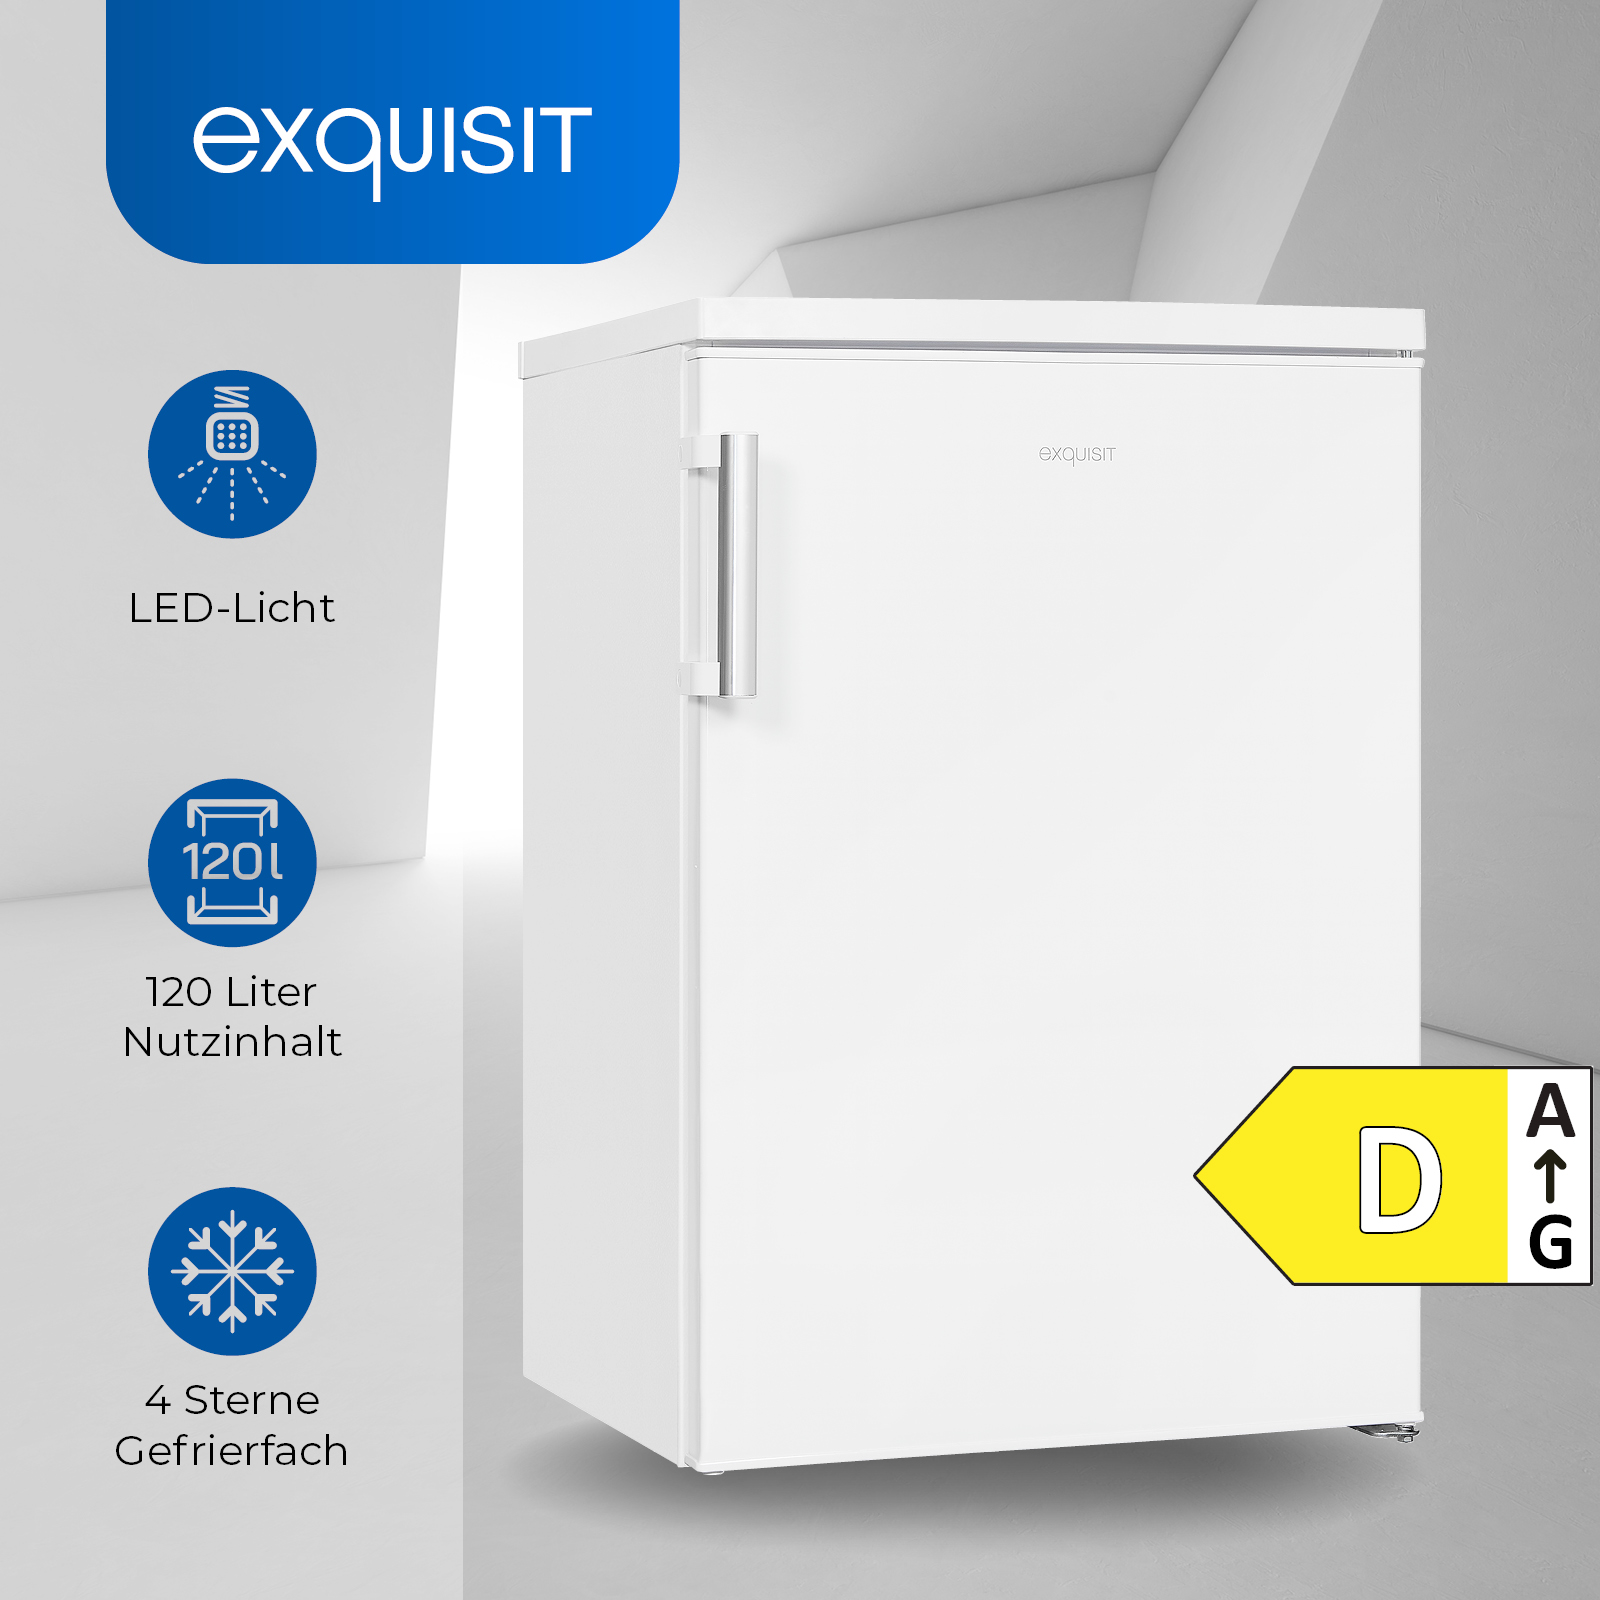 EXQUISIT KS16-4-H-010D weiss Kühlschrank mm 850 (D, hoch, Weiß)